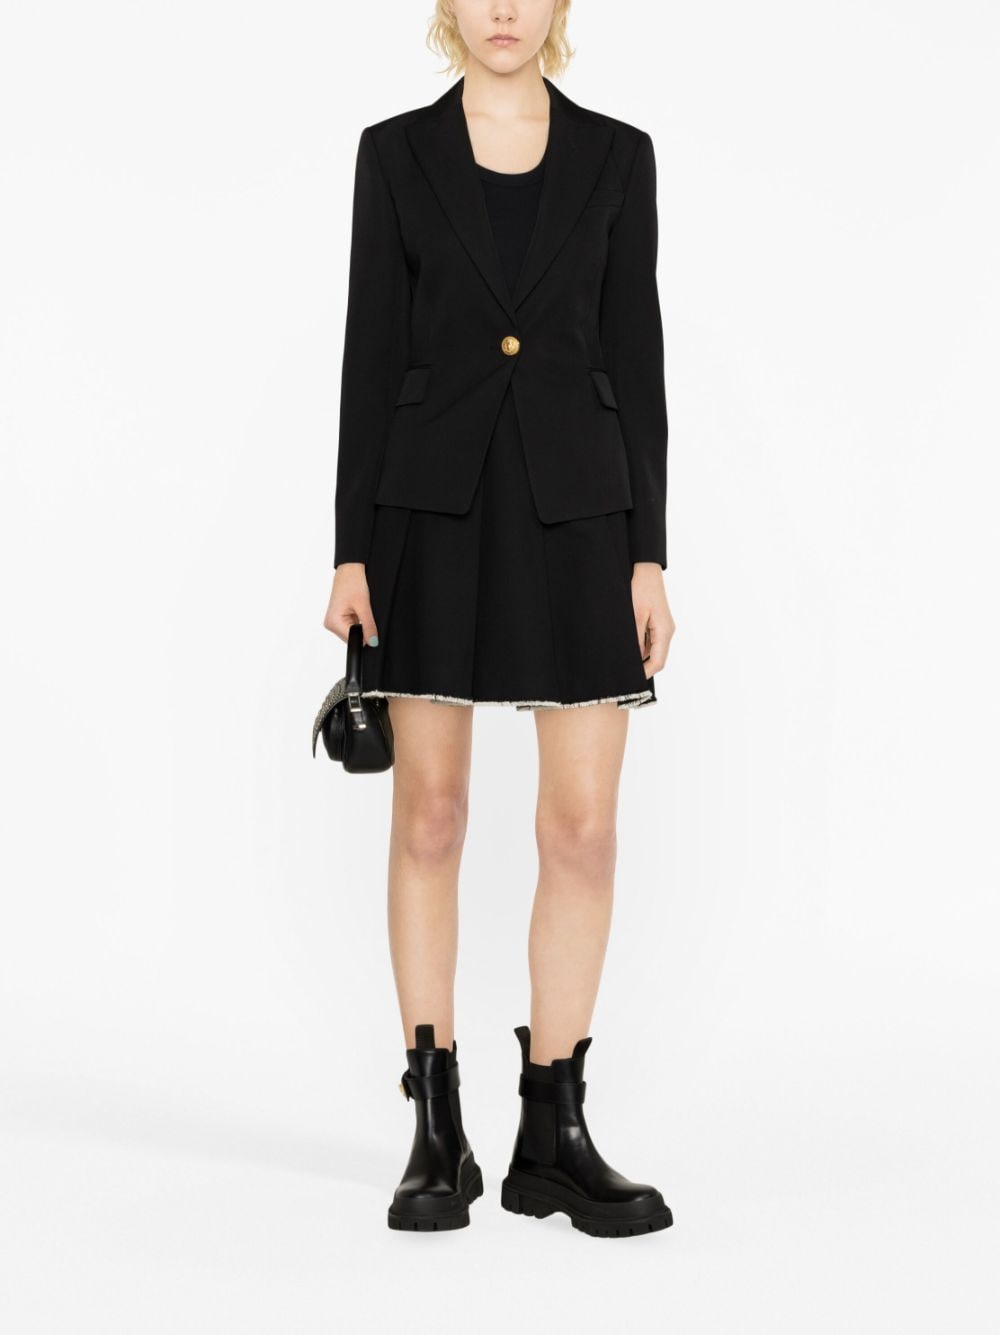 BALMAIN Sophisticated Black Wool Blazer for Women by a Popular Designer